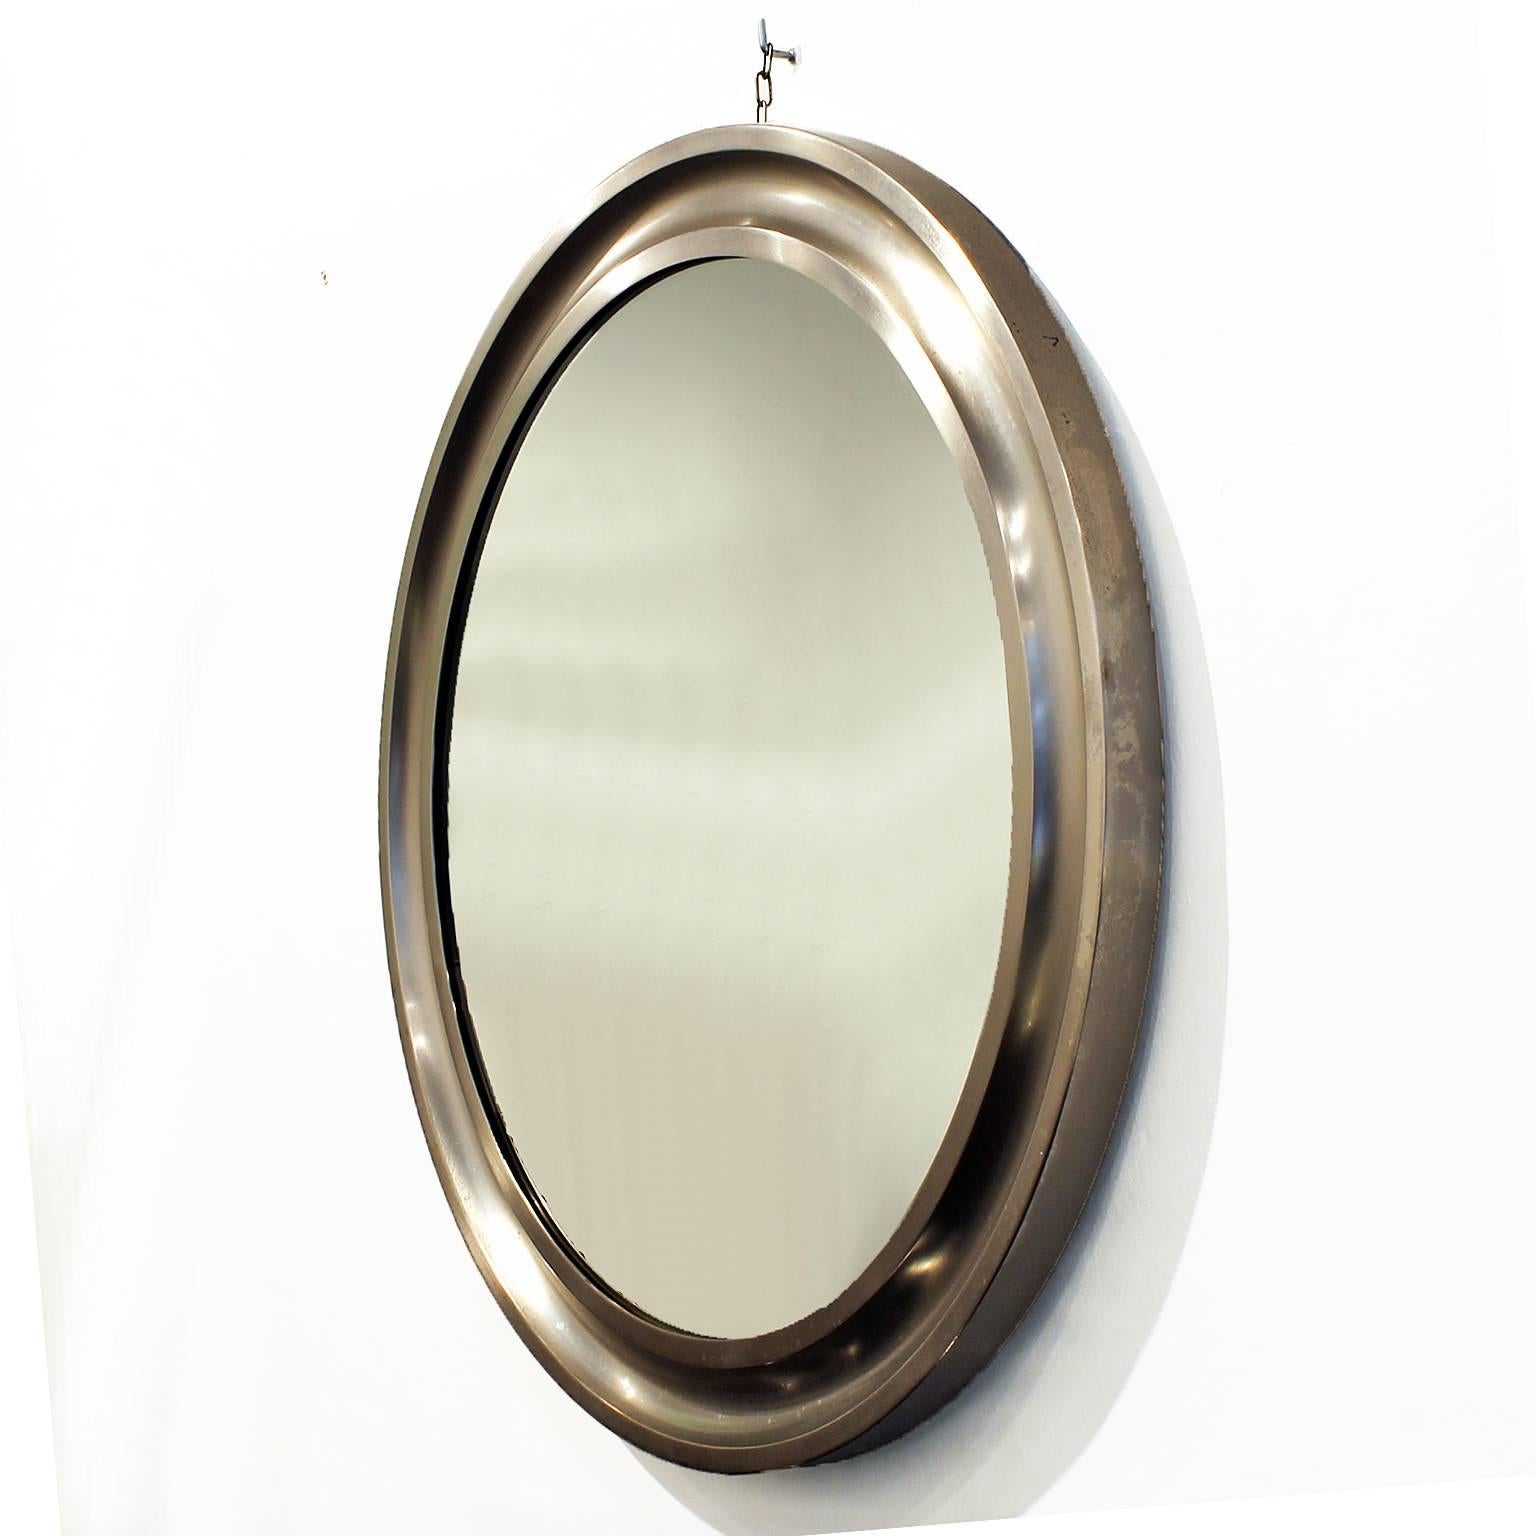 Round mirror, brushed aluminium moulding frame.
Design: Sergio Mazza for Artemide

Italy, circa 1960.